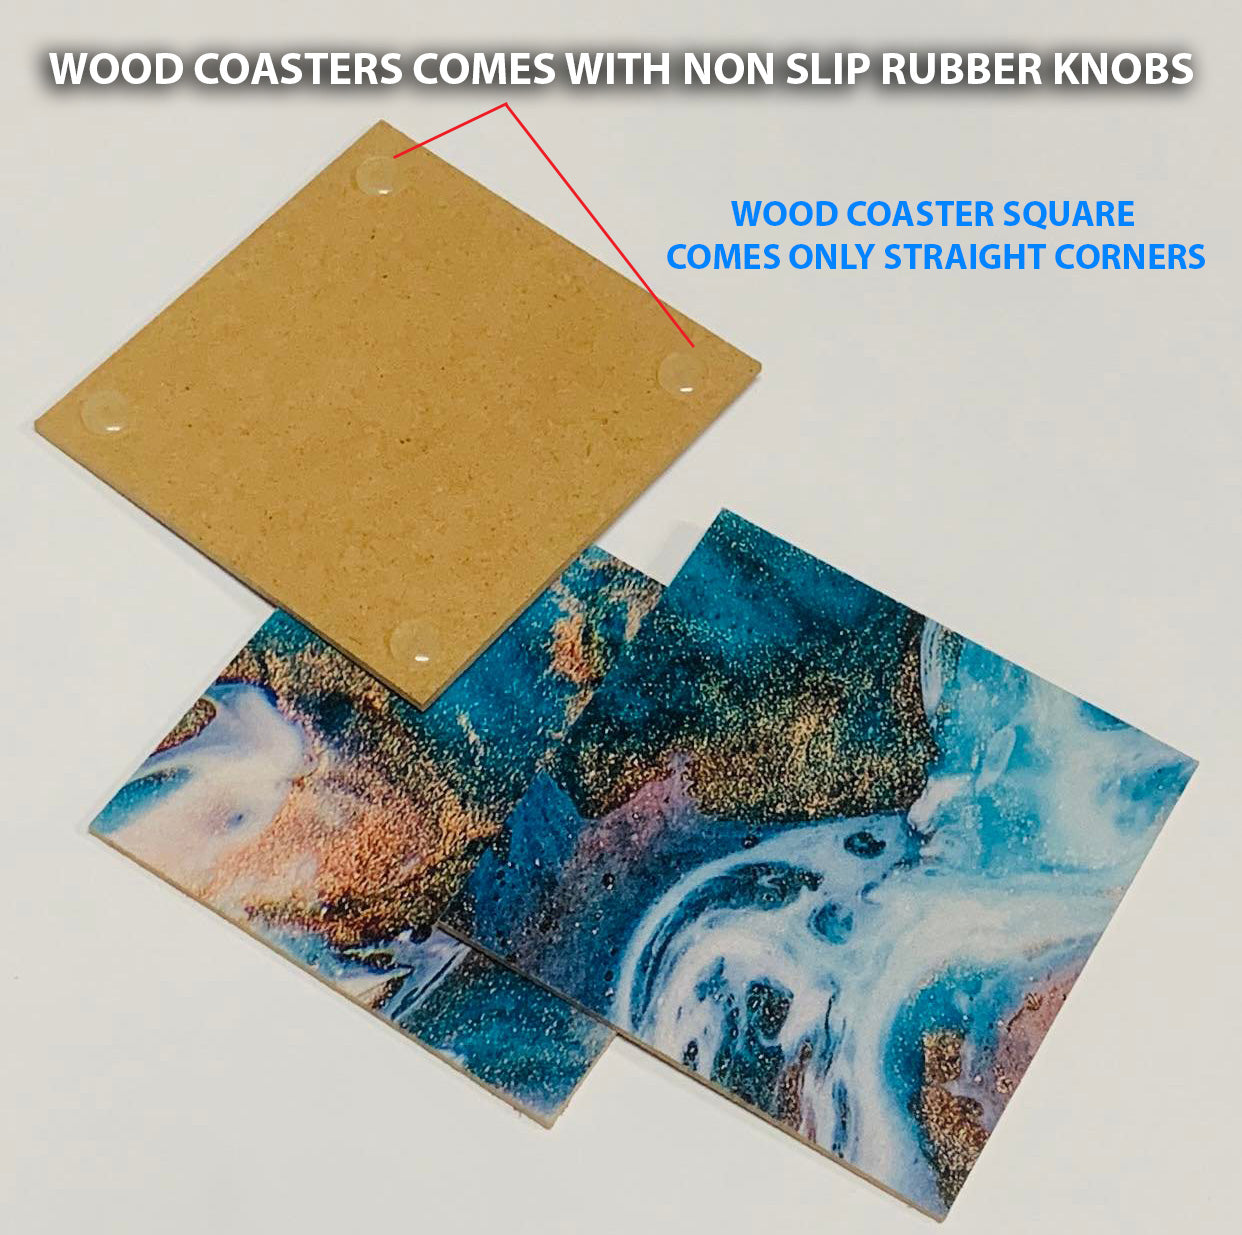 Wooden Boardwalk in Crandon Park USA Coasters Wood & Rubber - Set of 6 Coasters